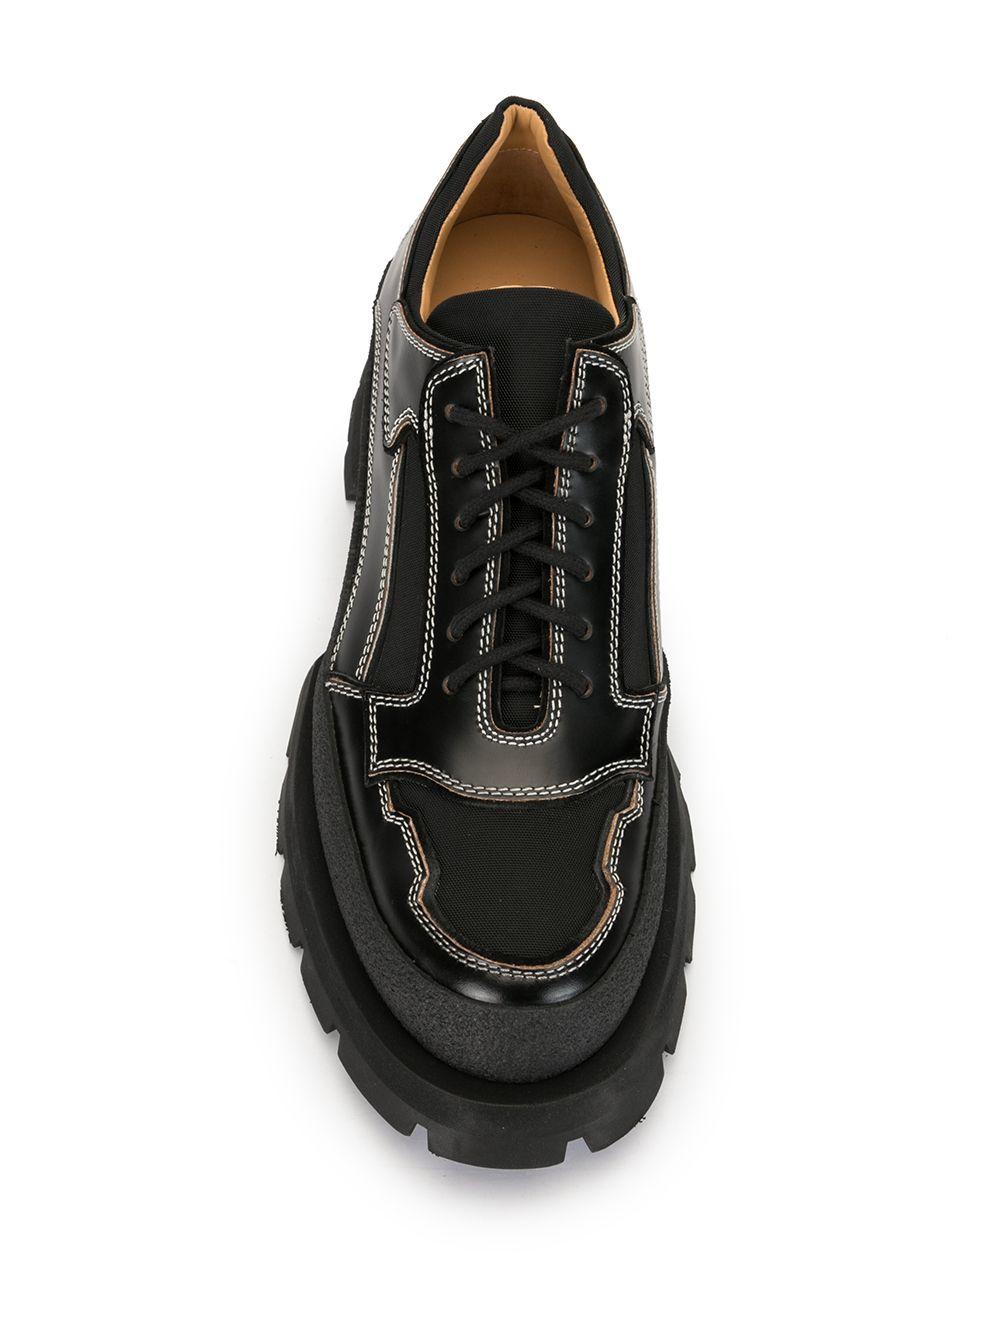 Jil Sander Leather Derby Lace Up Shoes in Black for Men - Lyst